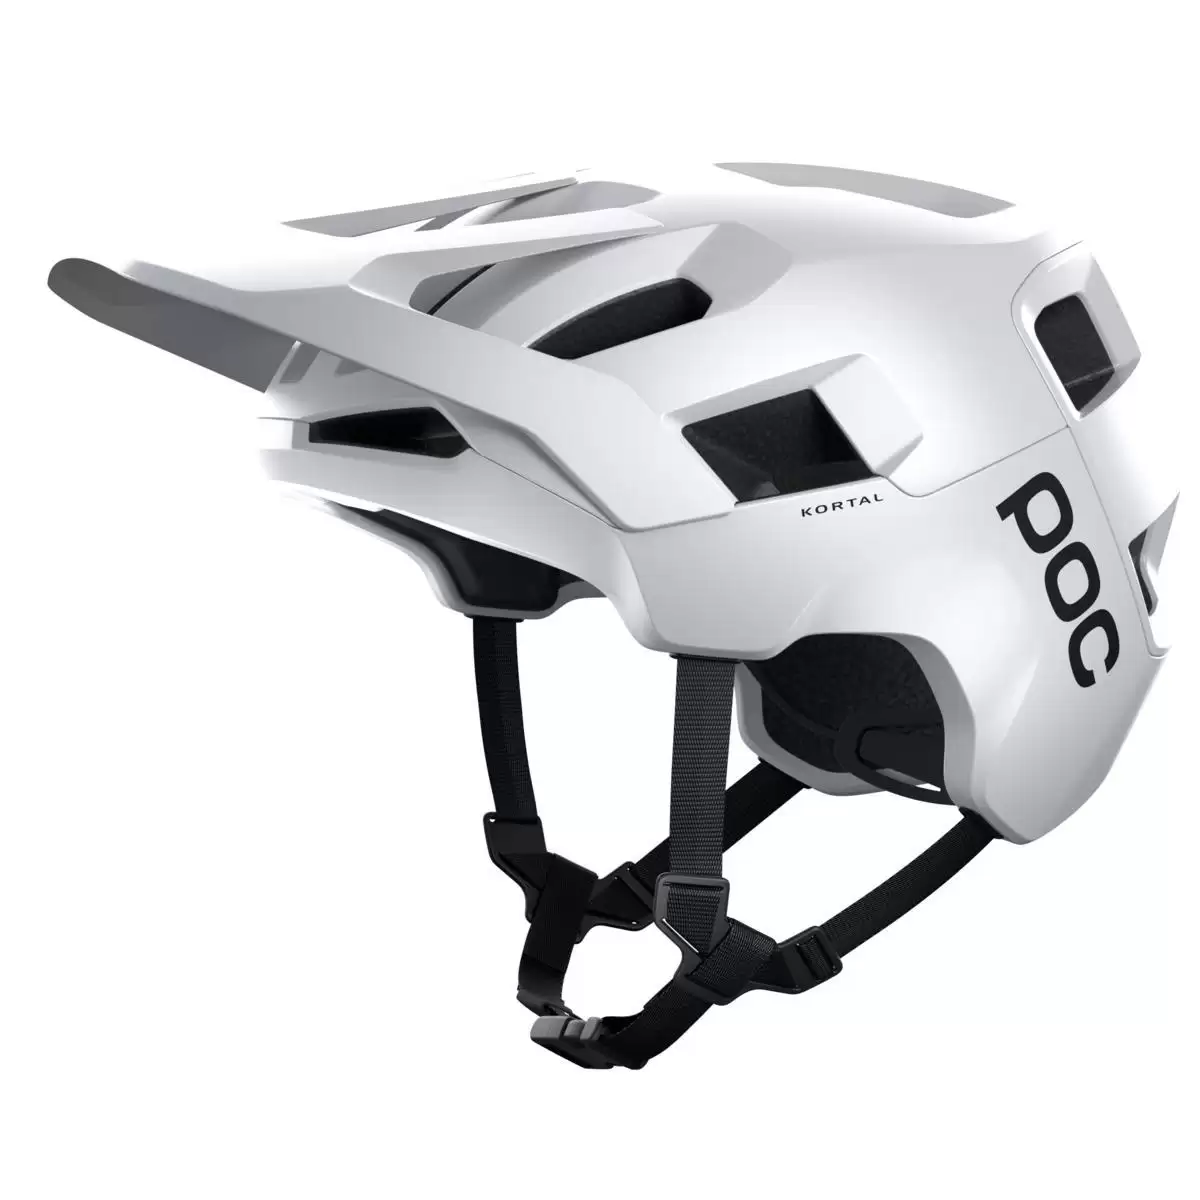 Helmet Kortal Hydrogen White Matt Size XS-S (51-54cm) - image